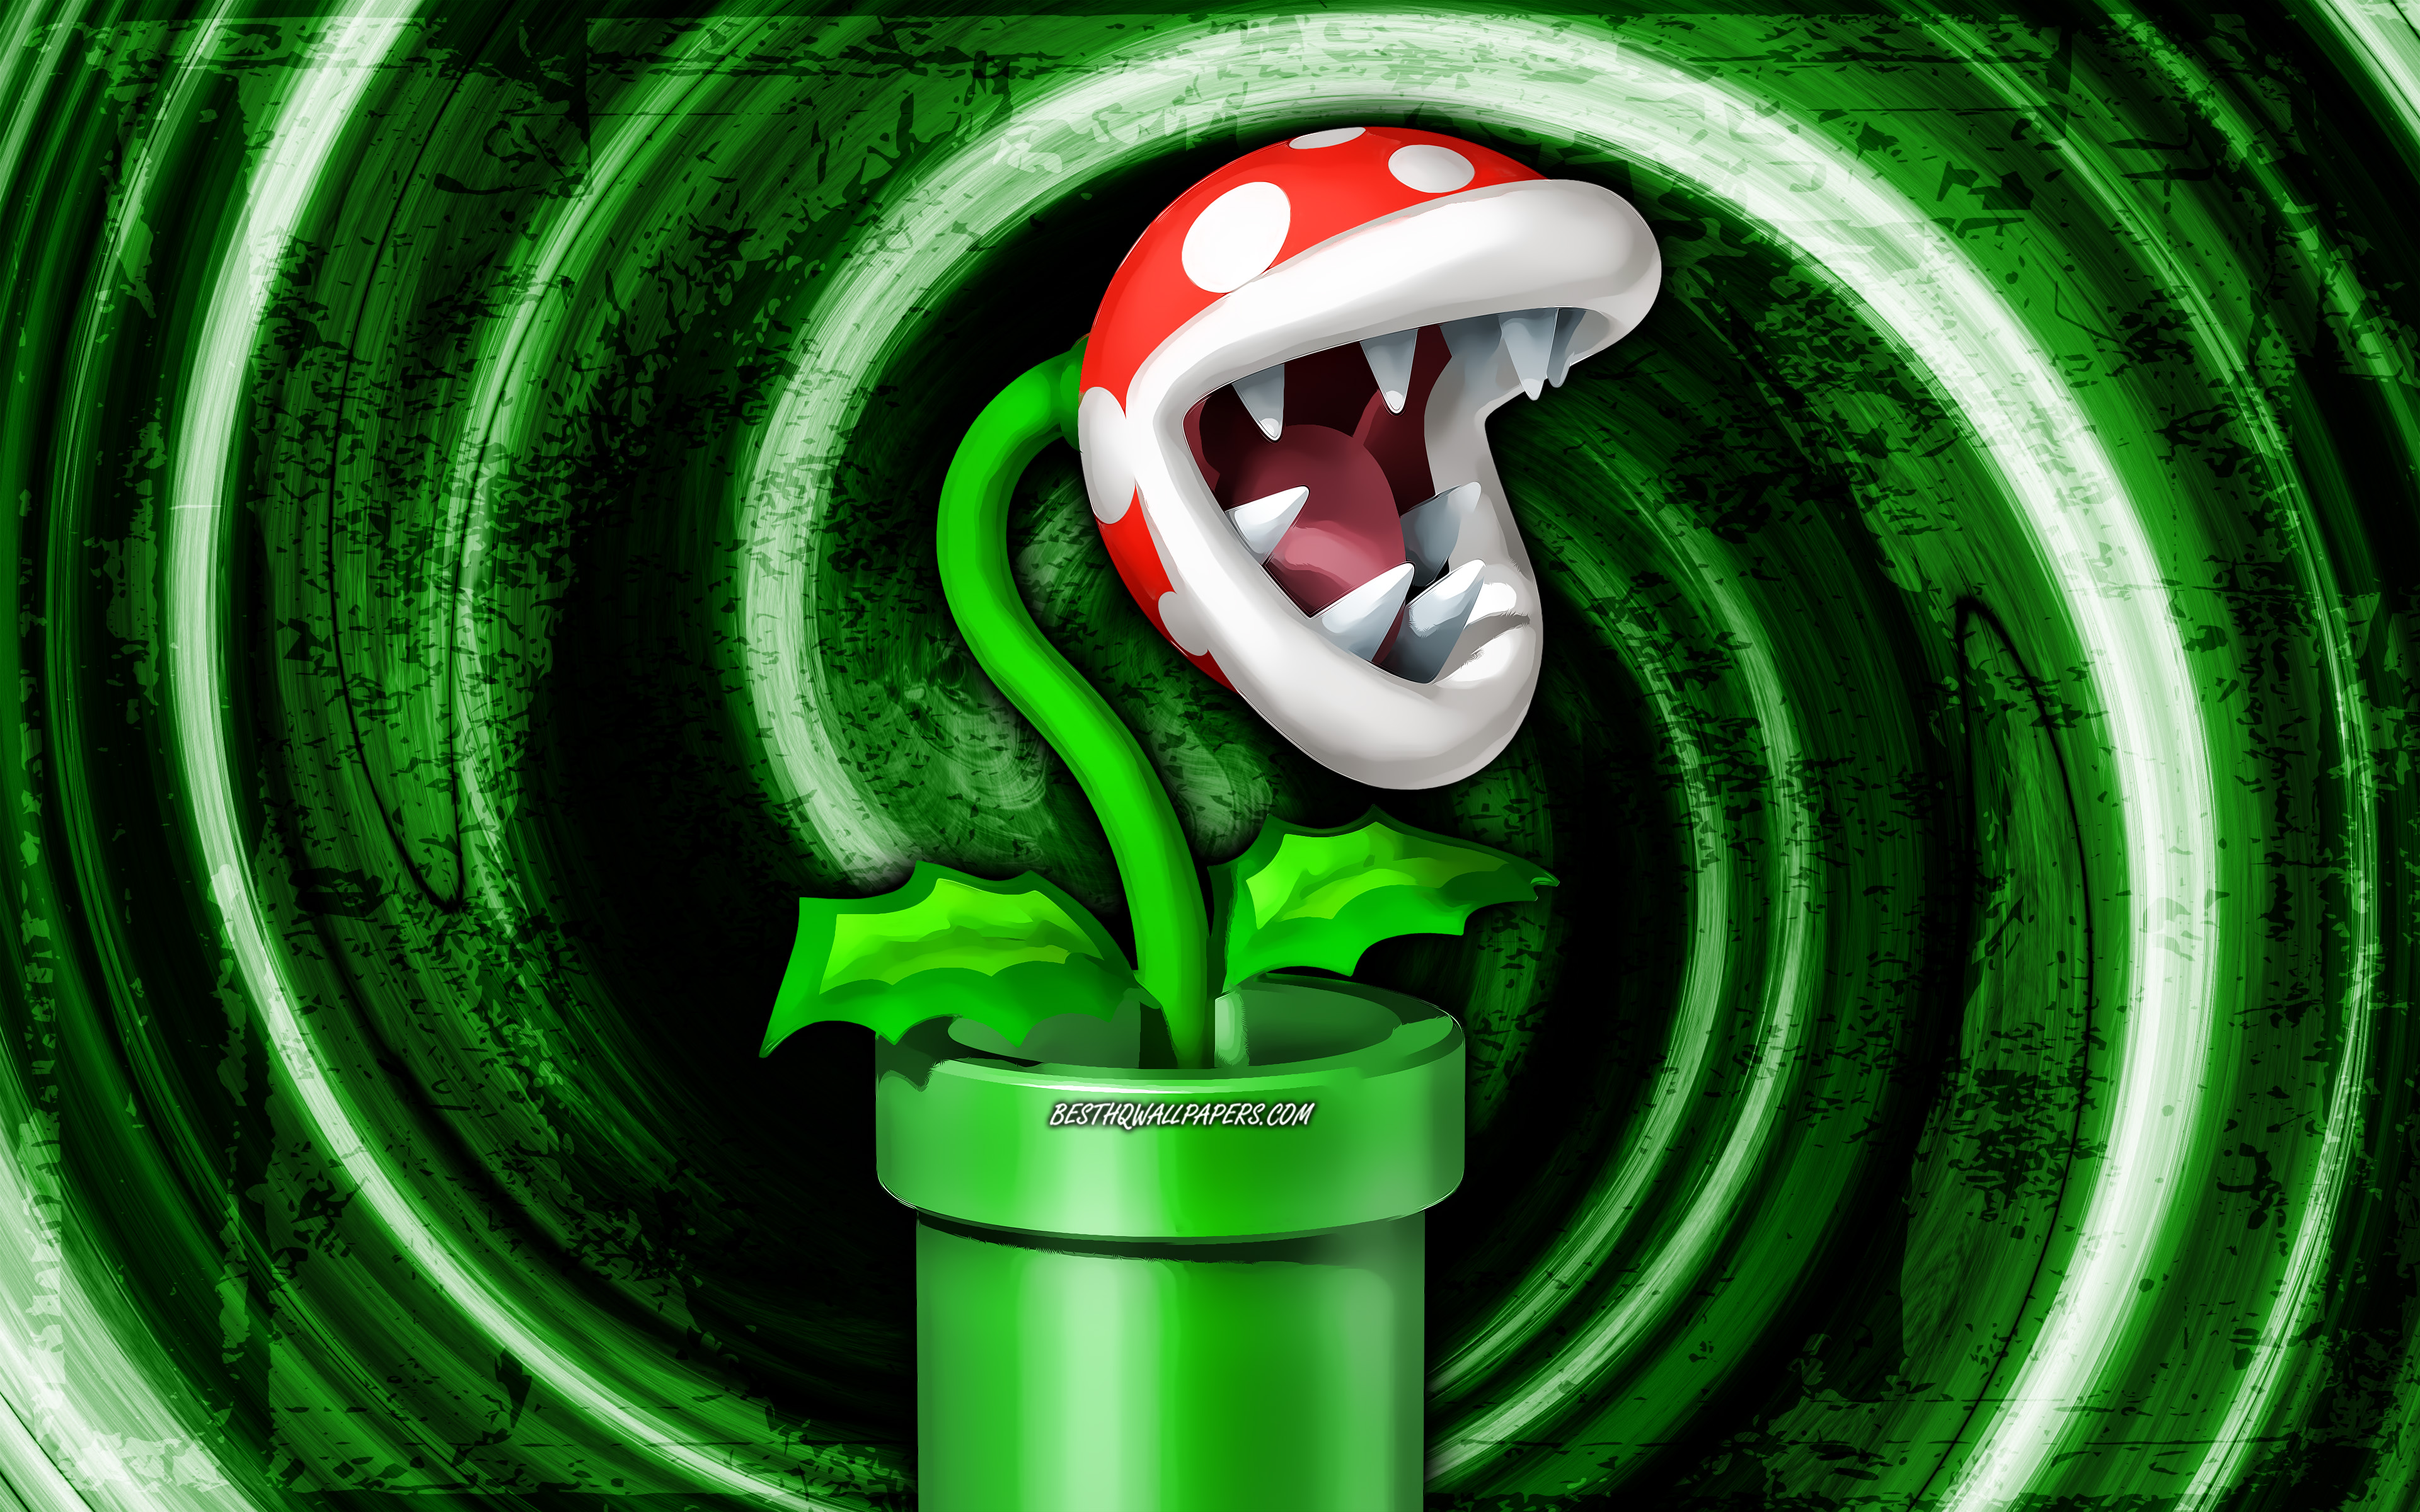 Download wallpaper 4k, Piranha Plant, green grunge background, vortex, Super Mario, cartoon plant, Super Mario characters, Super Mario Bros, Piranha Plant Super Mario for desktop with resolution 3840x2400. High Quality HD picture